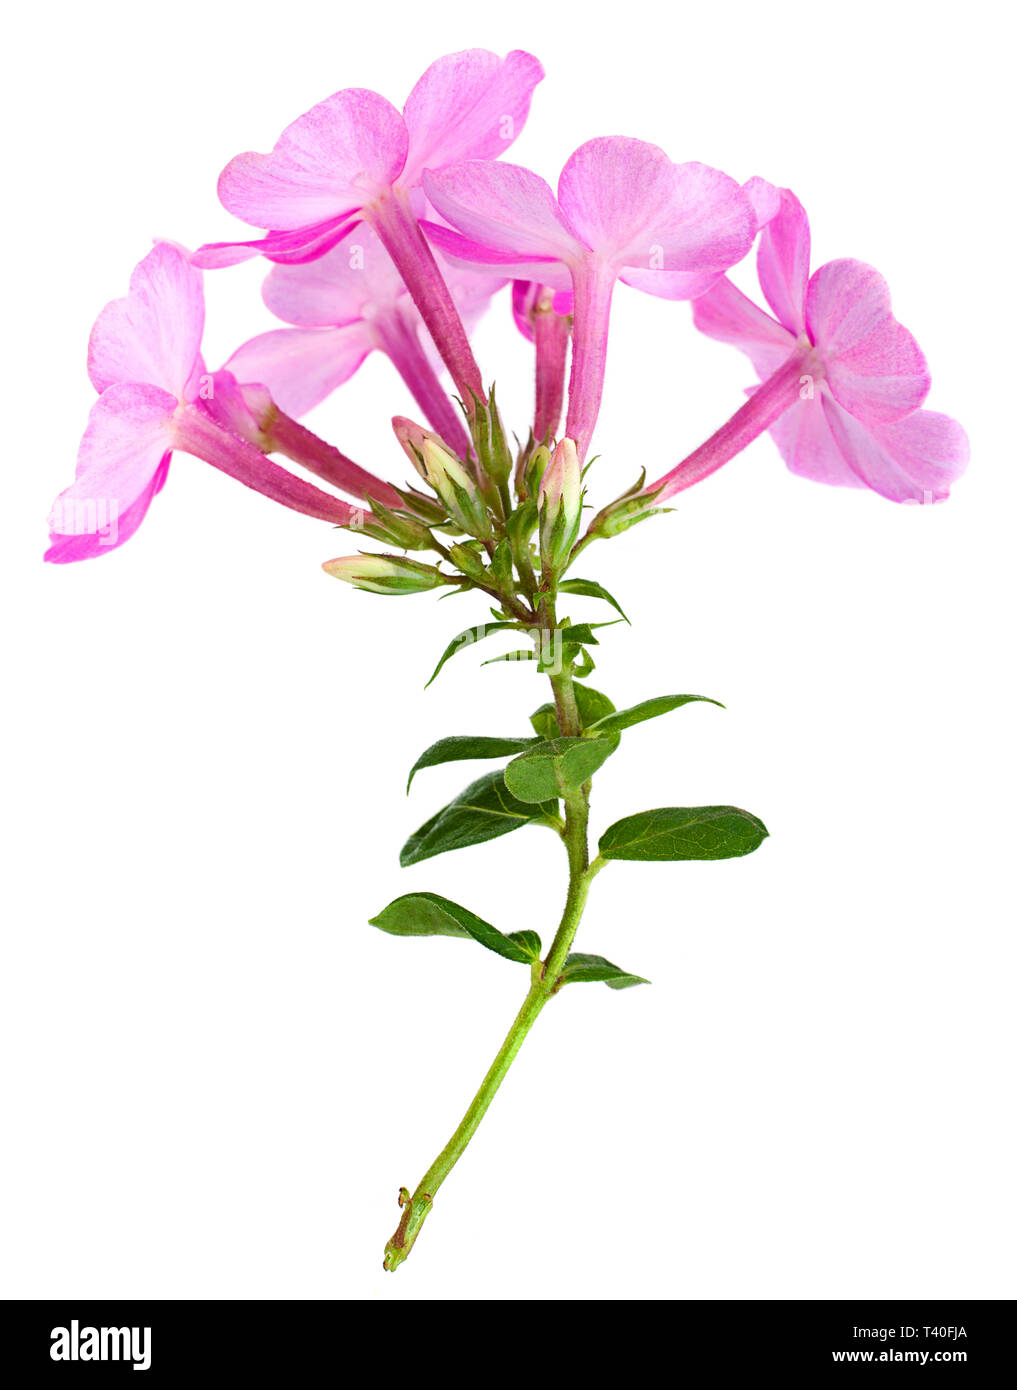 Phlox flower closeup isolated on white background Stock Photo